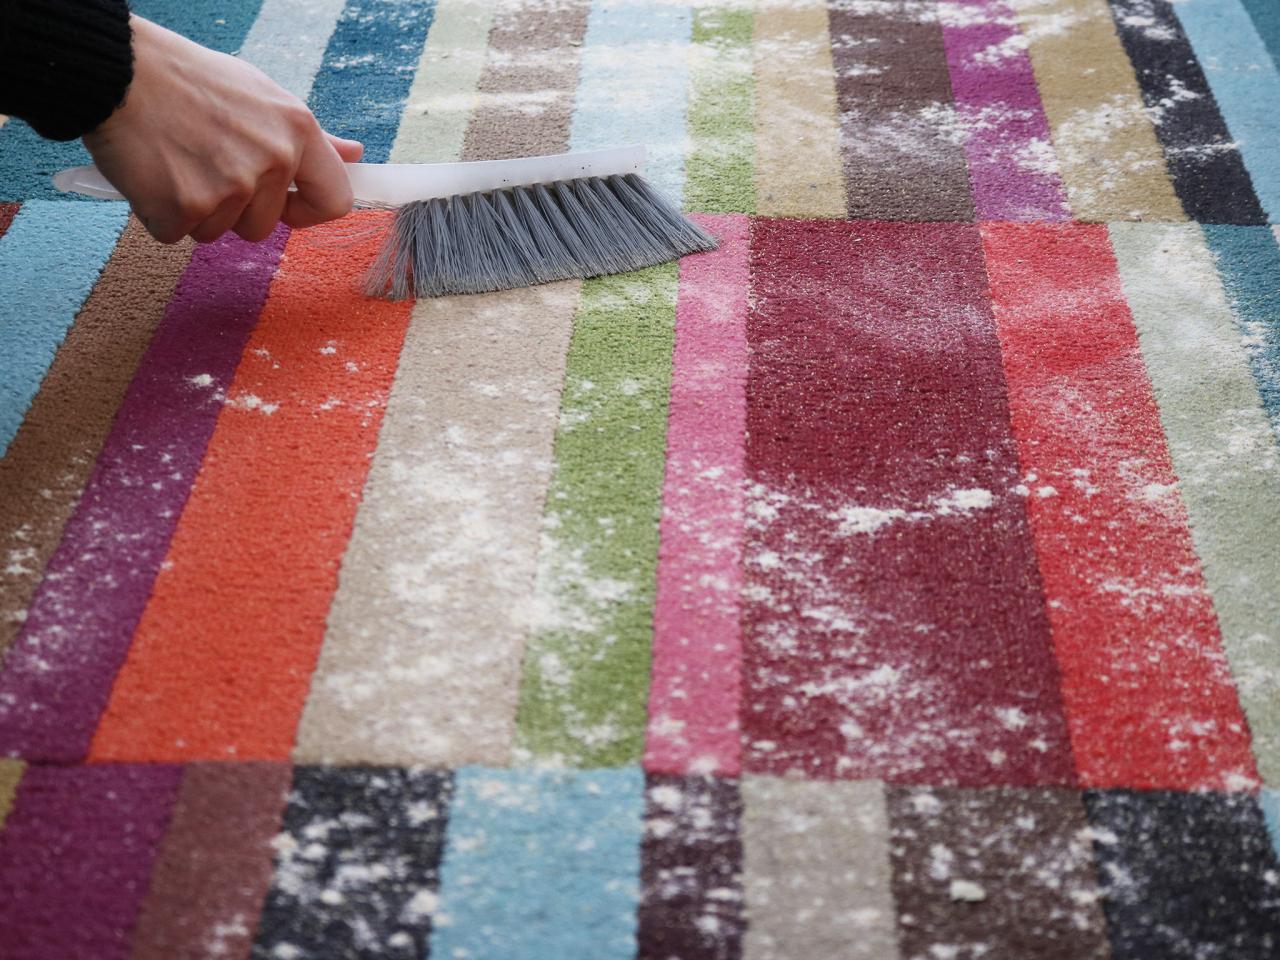 How to Make DIY Carpet Cleaner | DIY